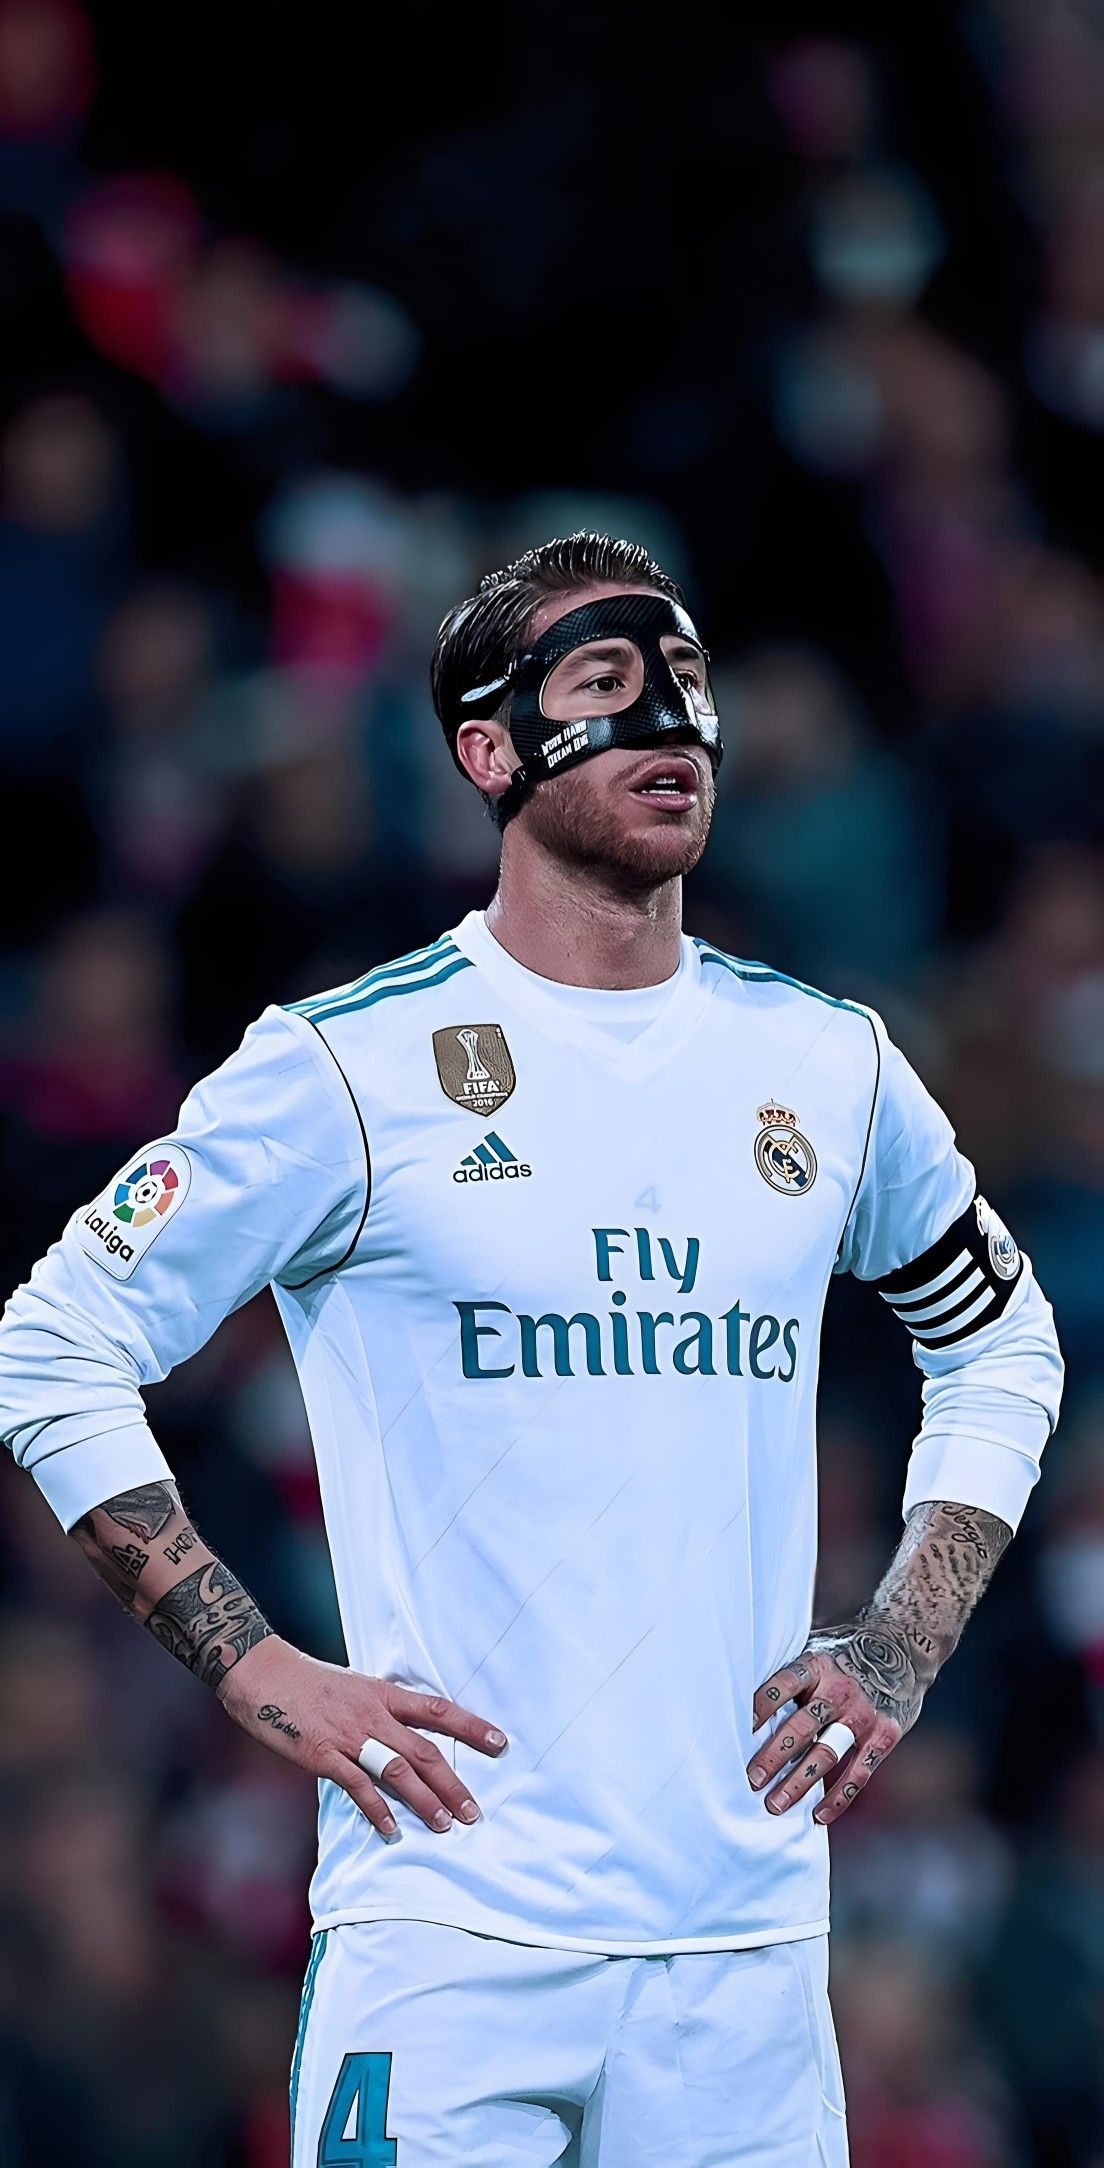 Wallpapers 4k Real Madrid - Sergio Ramos & Luka Modric Galactic Legends: Real Madrid 4K Wallpapers – Legendary Moments Captured